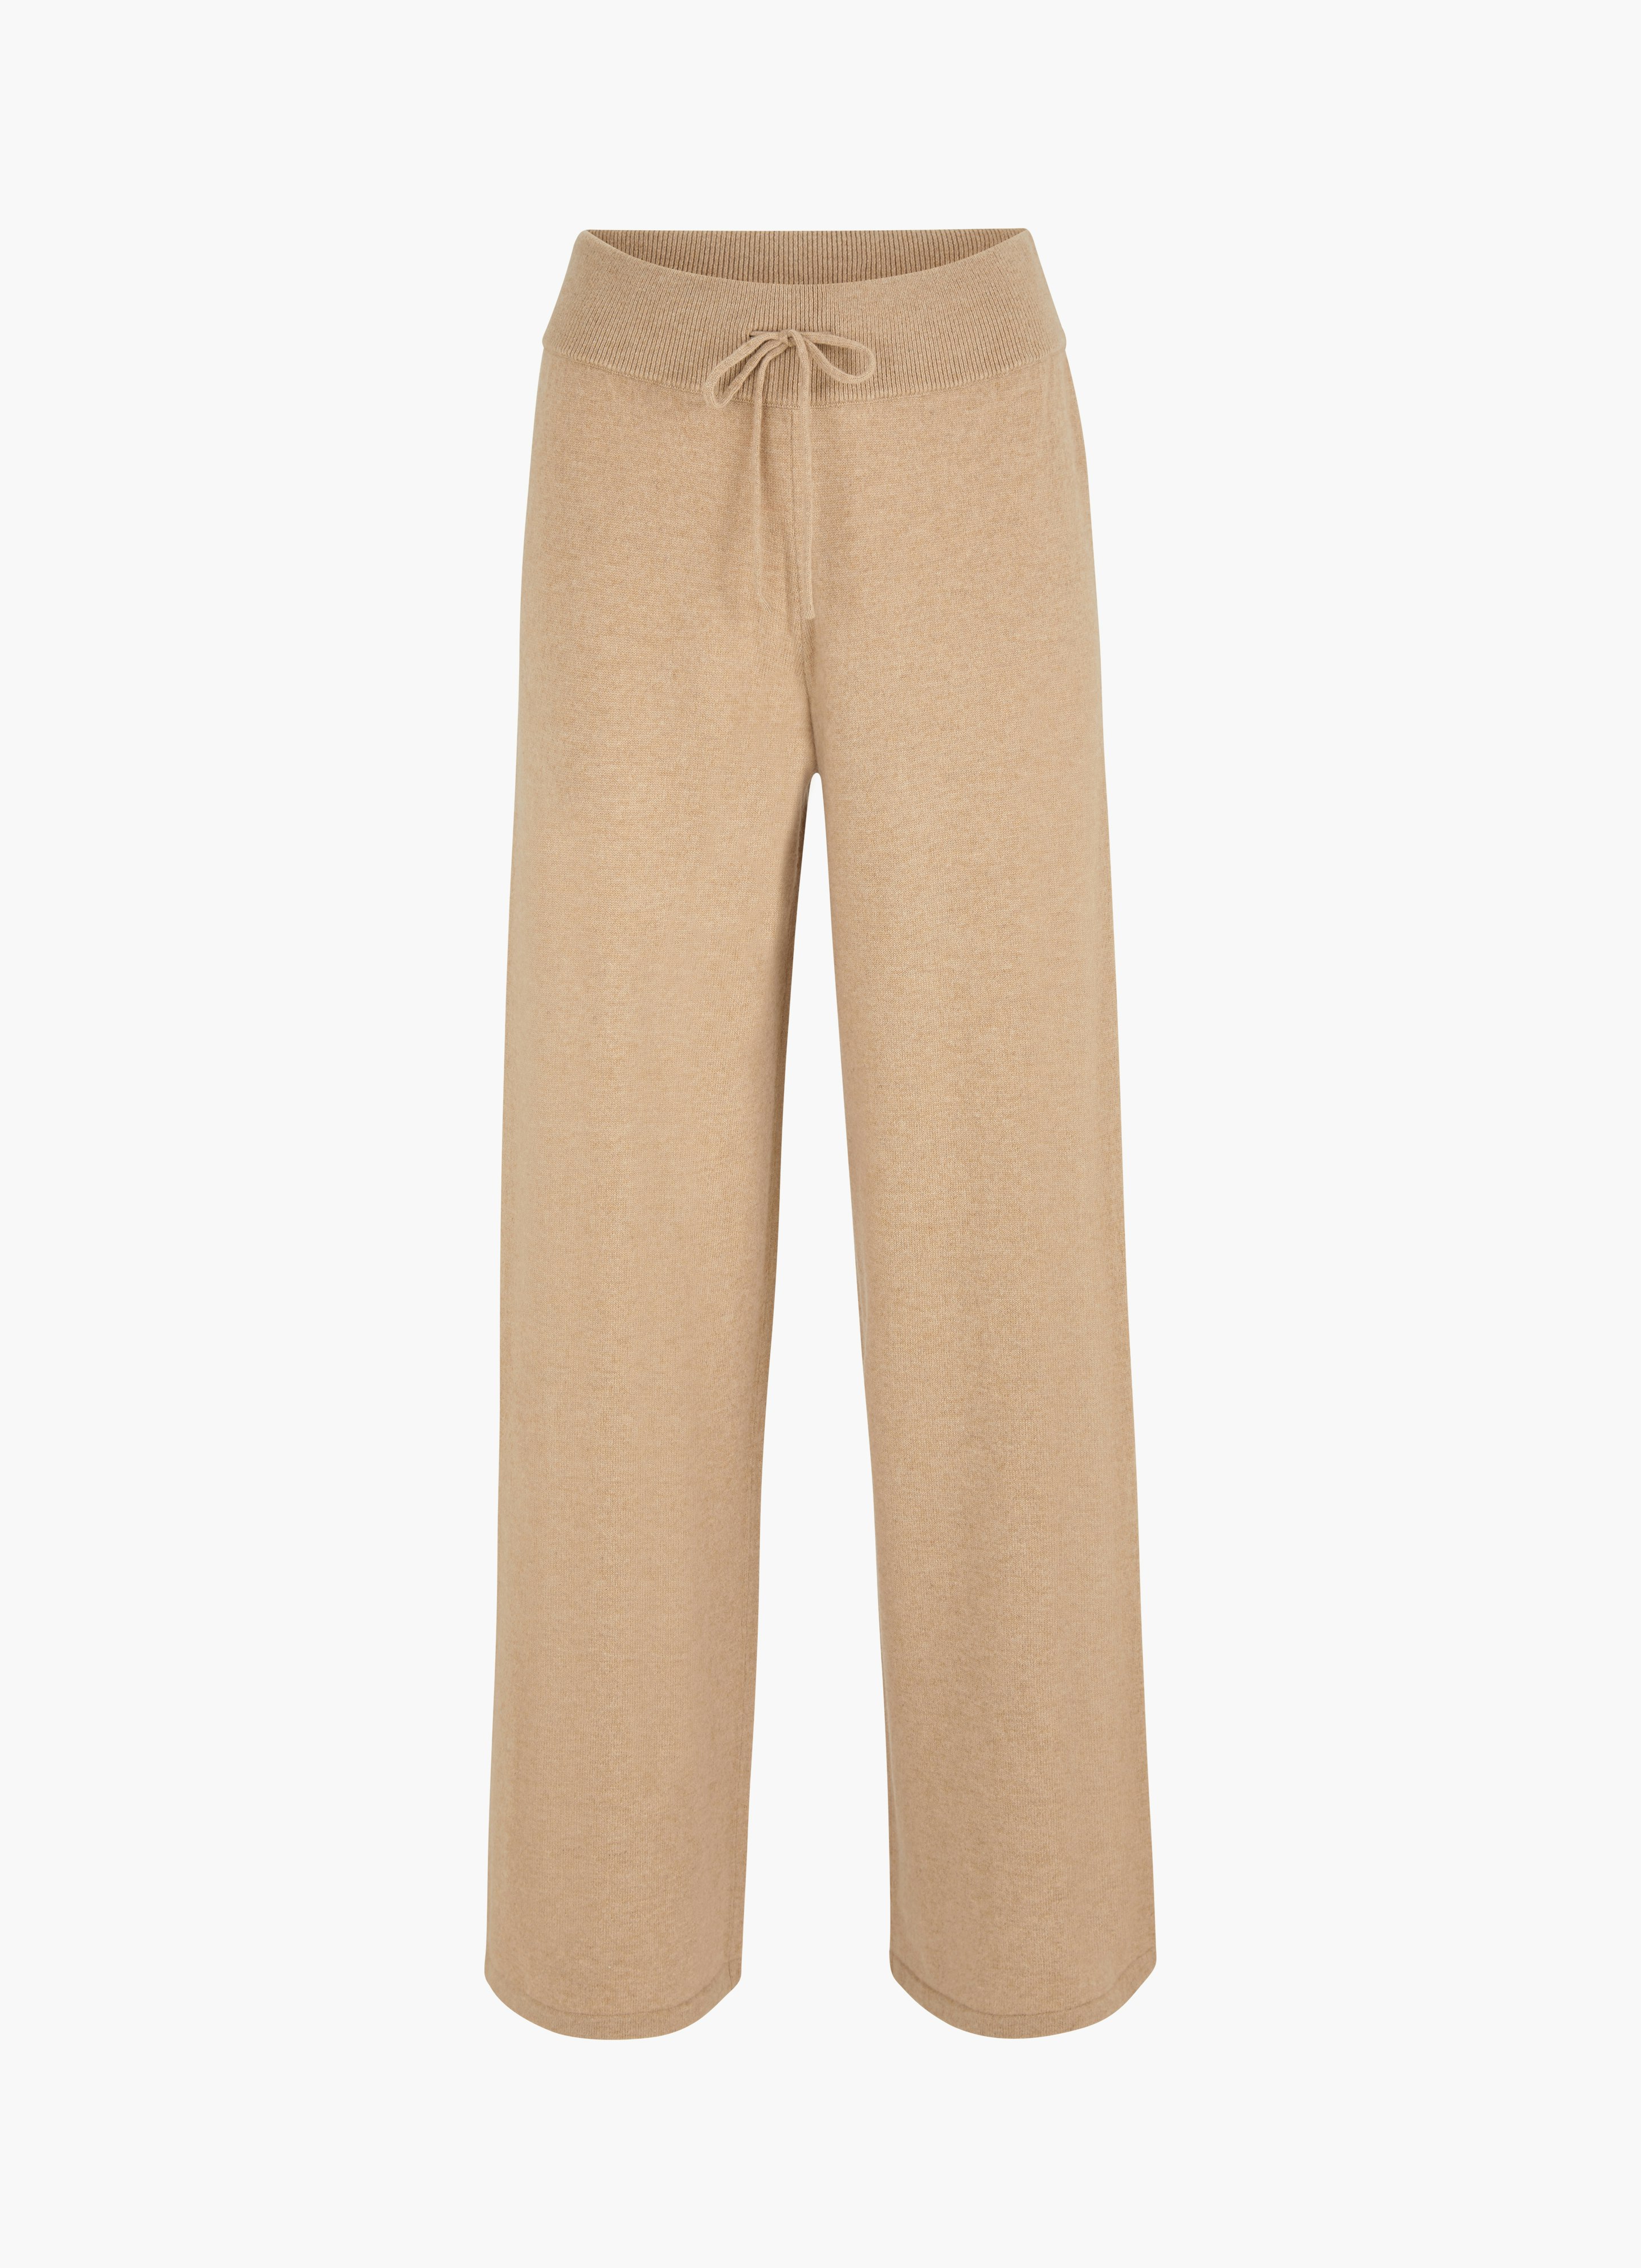 Beige Cashmere Blend - Knit Pants Frieda | Buy Pants online at JUVIA